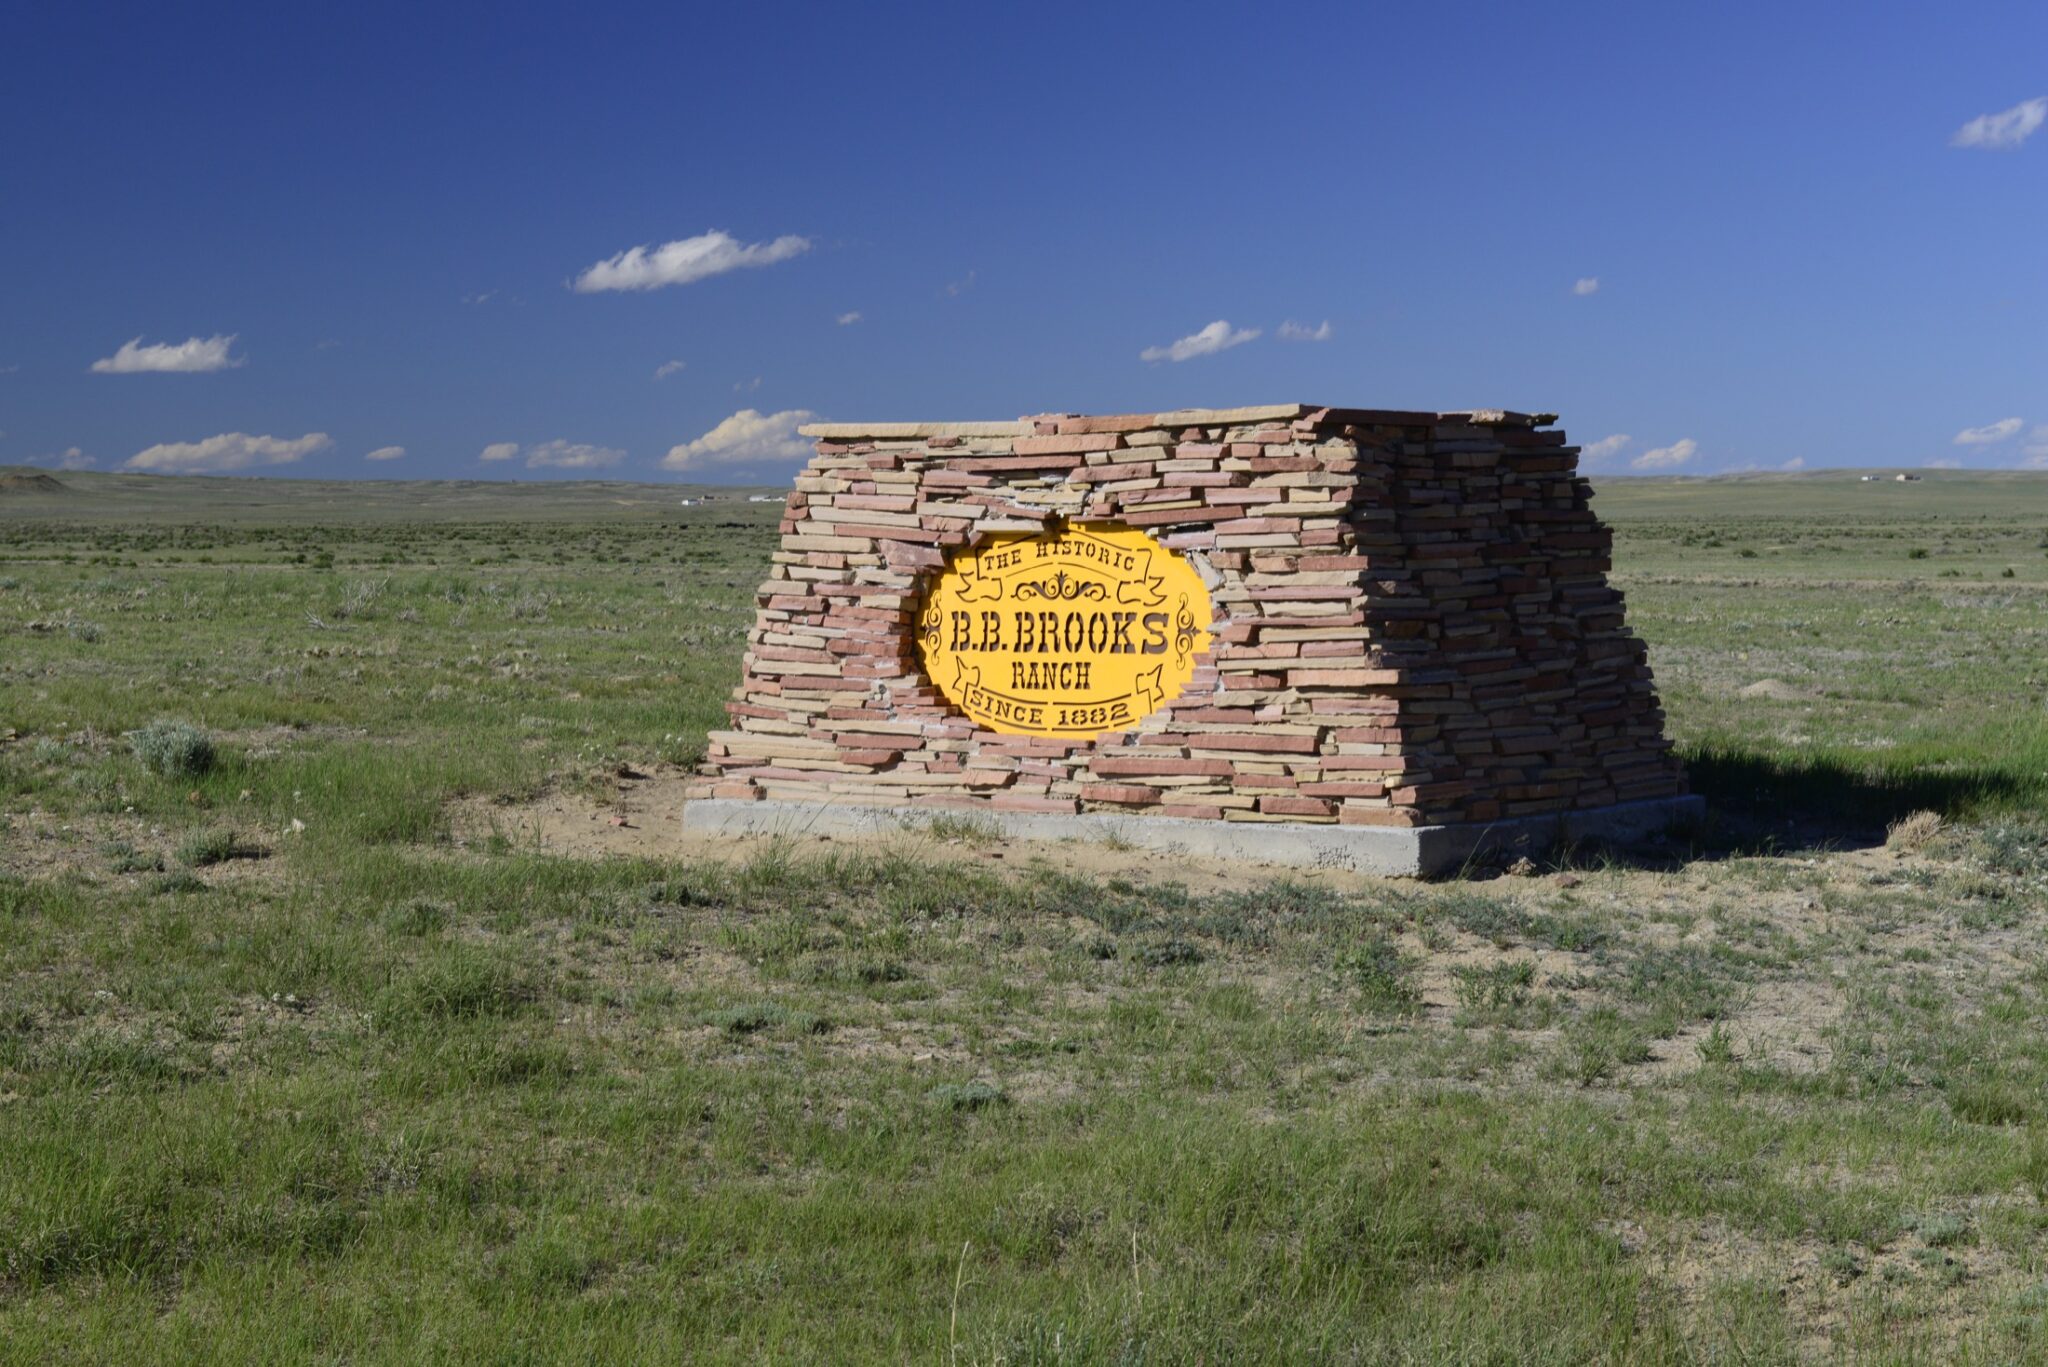 The B.B. Brooks Ranch sign